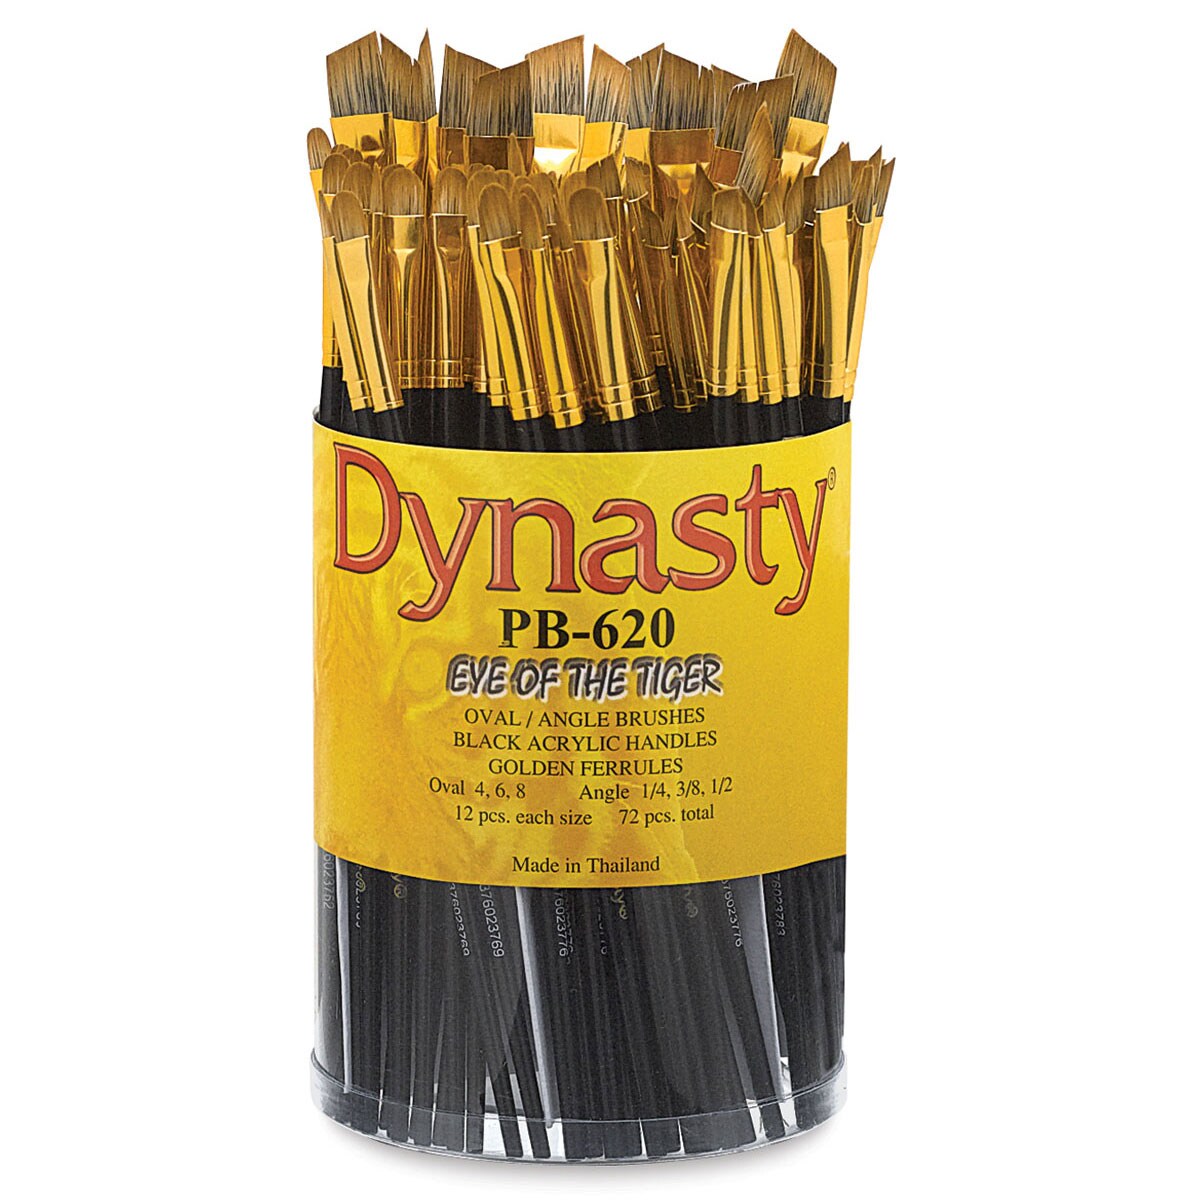 Dynasty Eye of the Tiger Brush Set - Filberts and Angulars, Set of 96